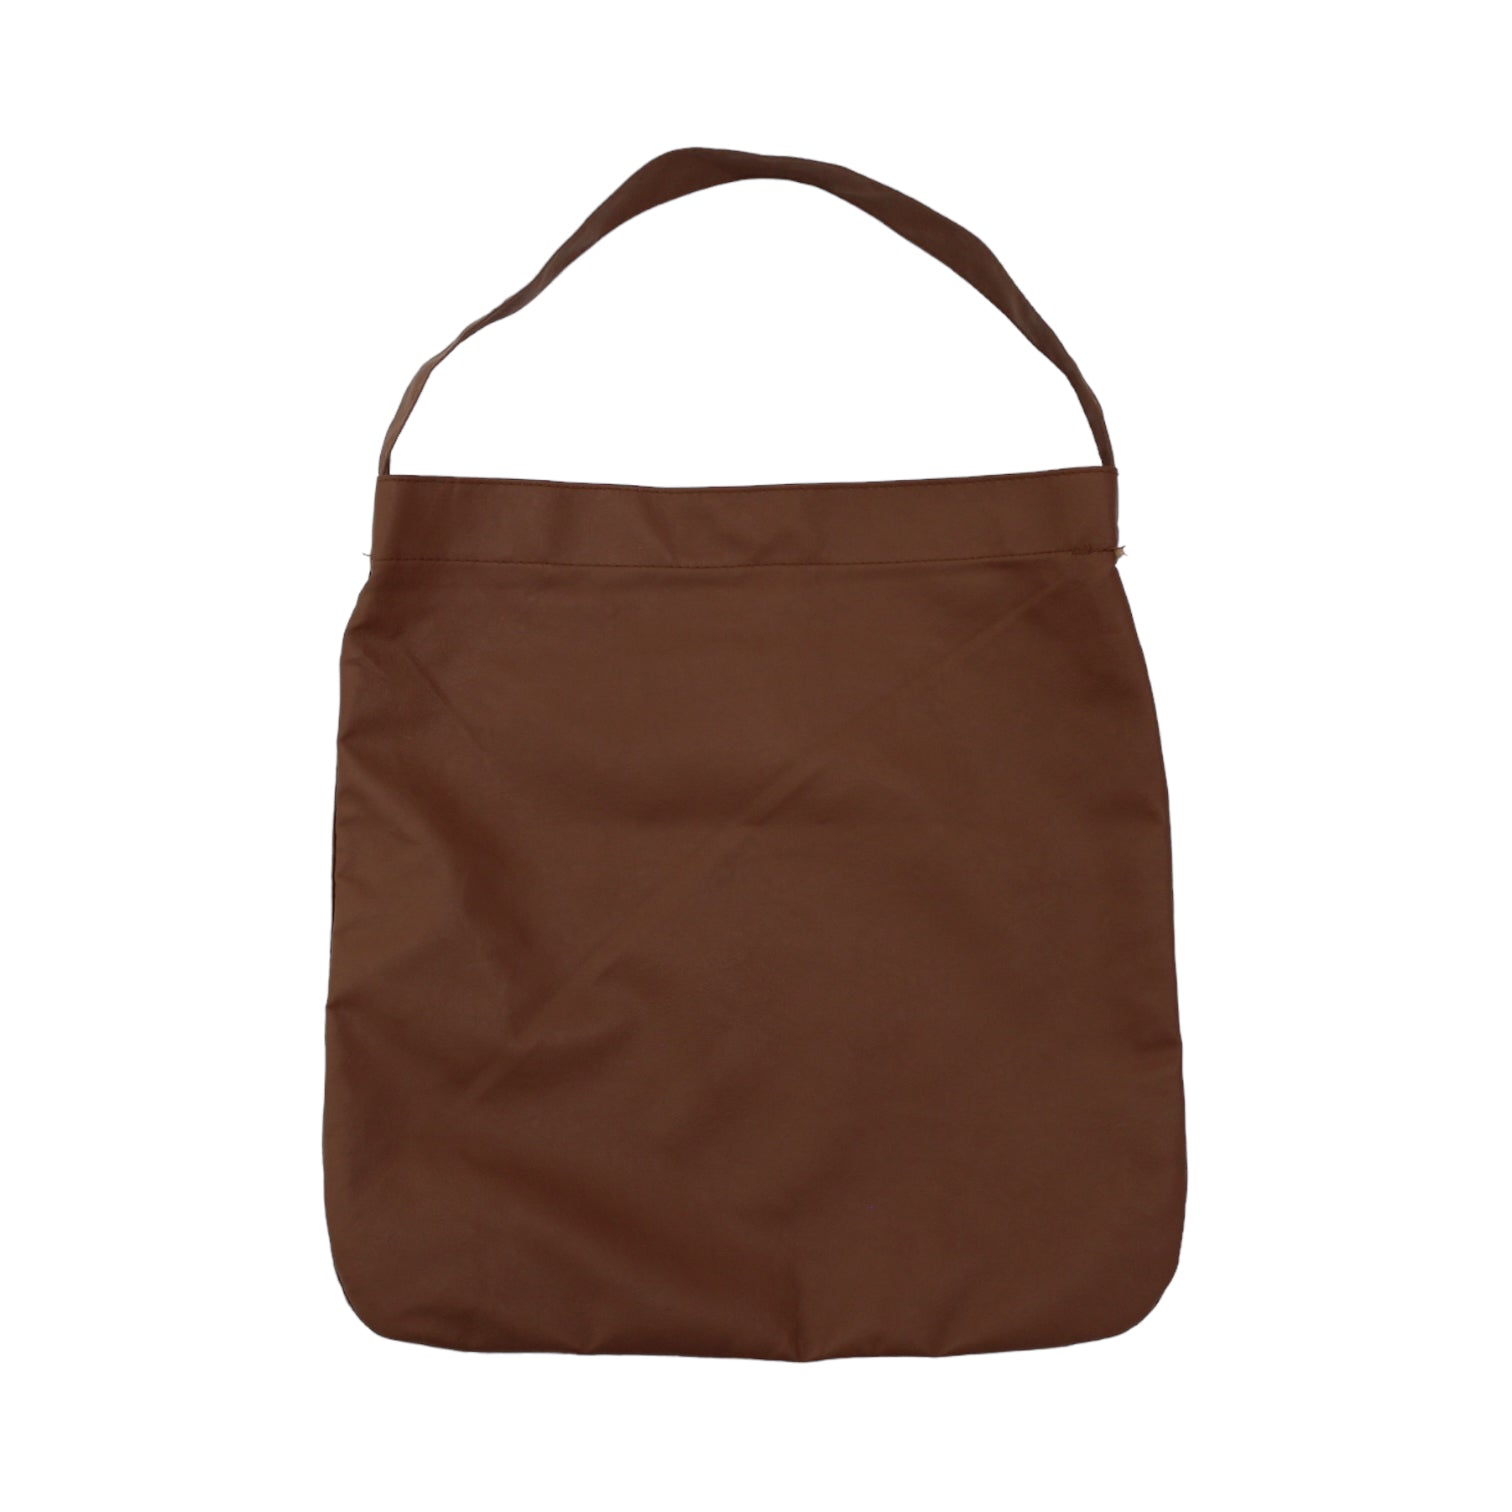 Brown faux leather shoulder bag gloria